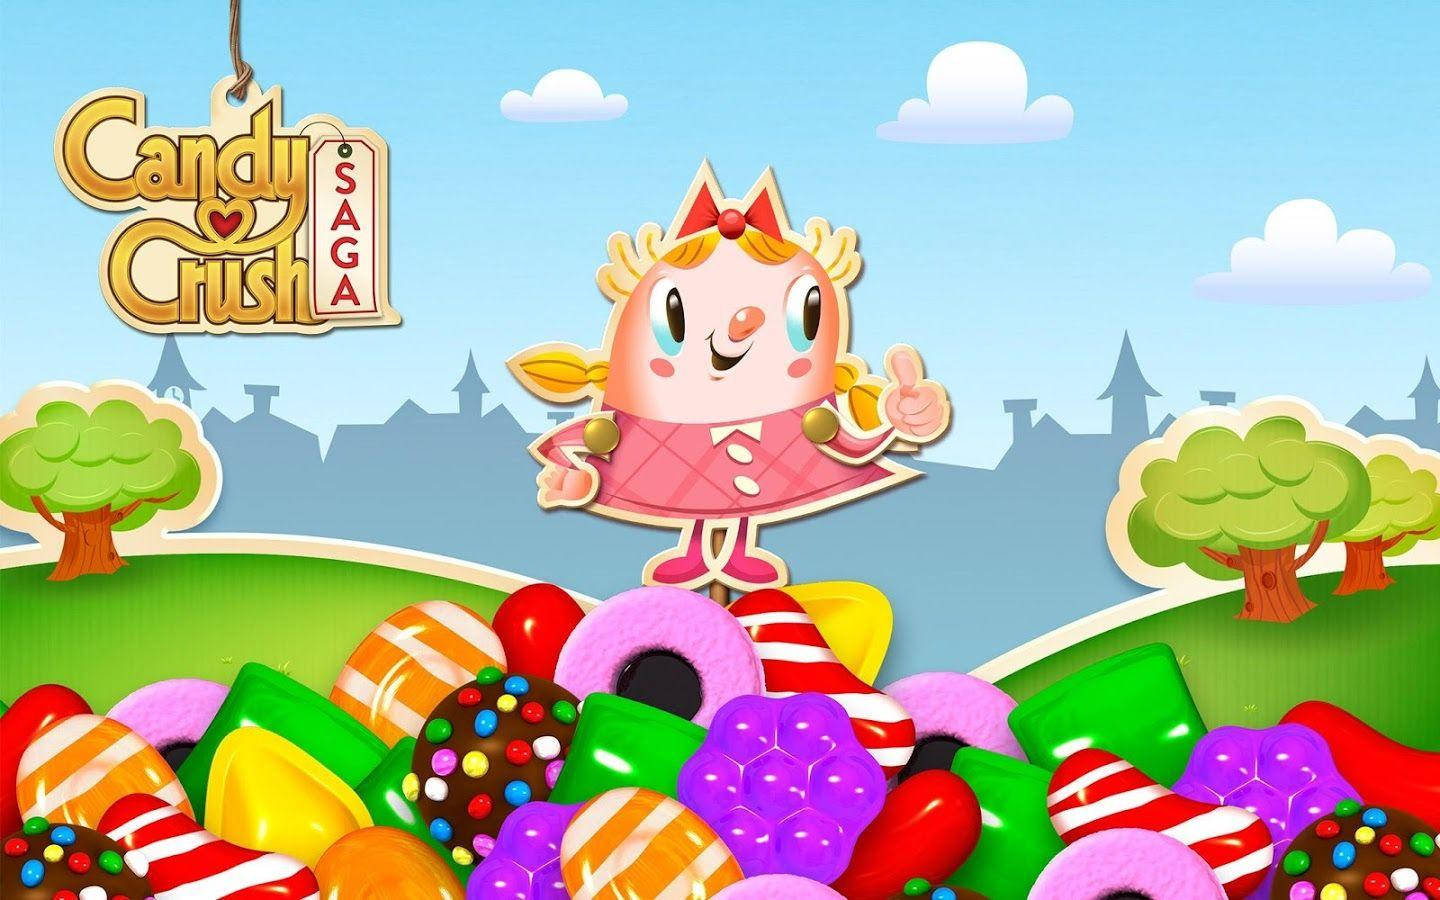 Candy Crush Jelly Saga Apk + MOD v3.13.3 (Unlimited Lives)